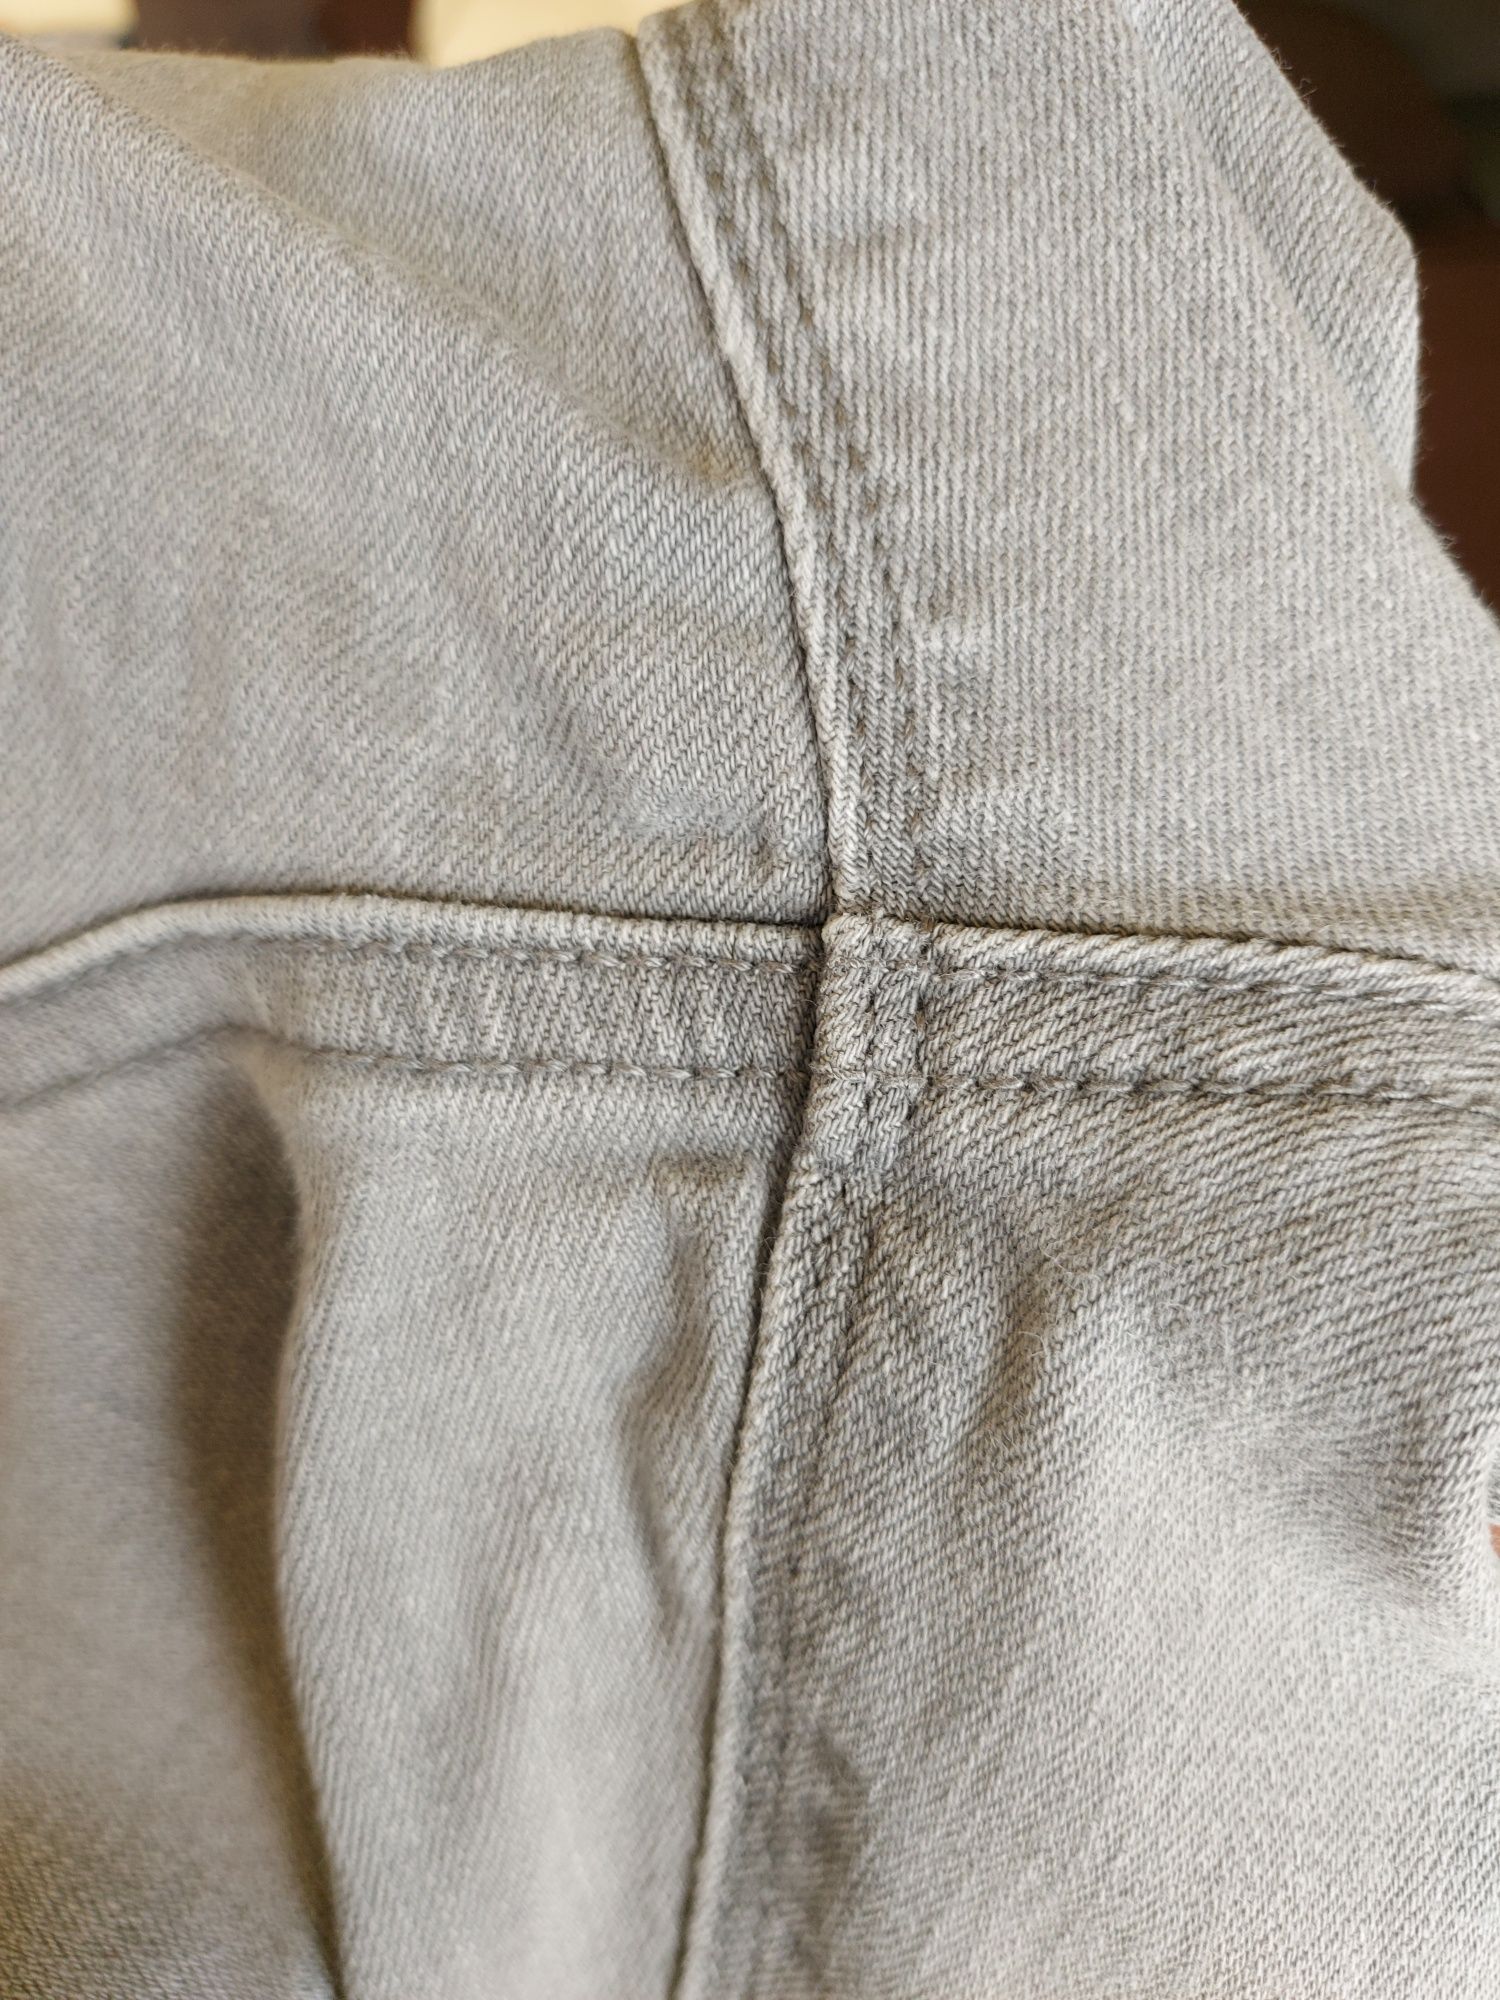 Spodnie jeans szare rozmiar 38